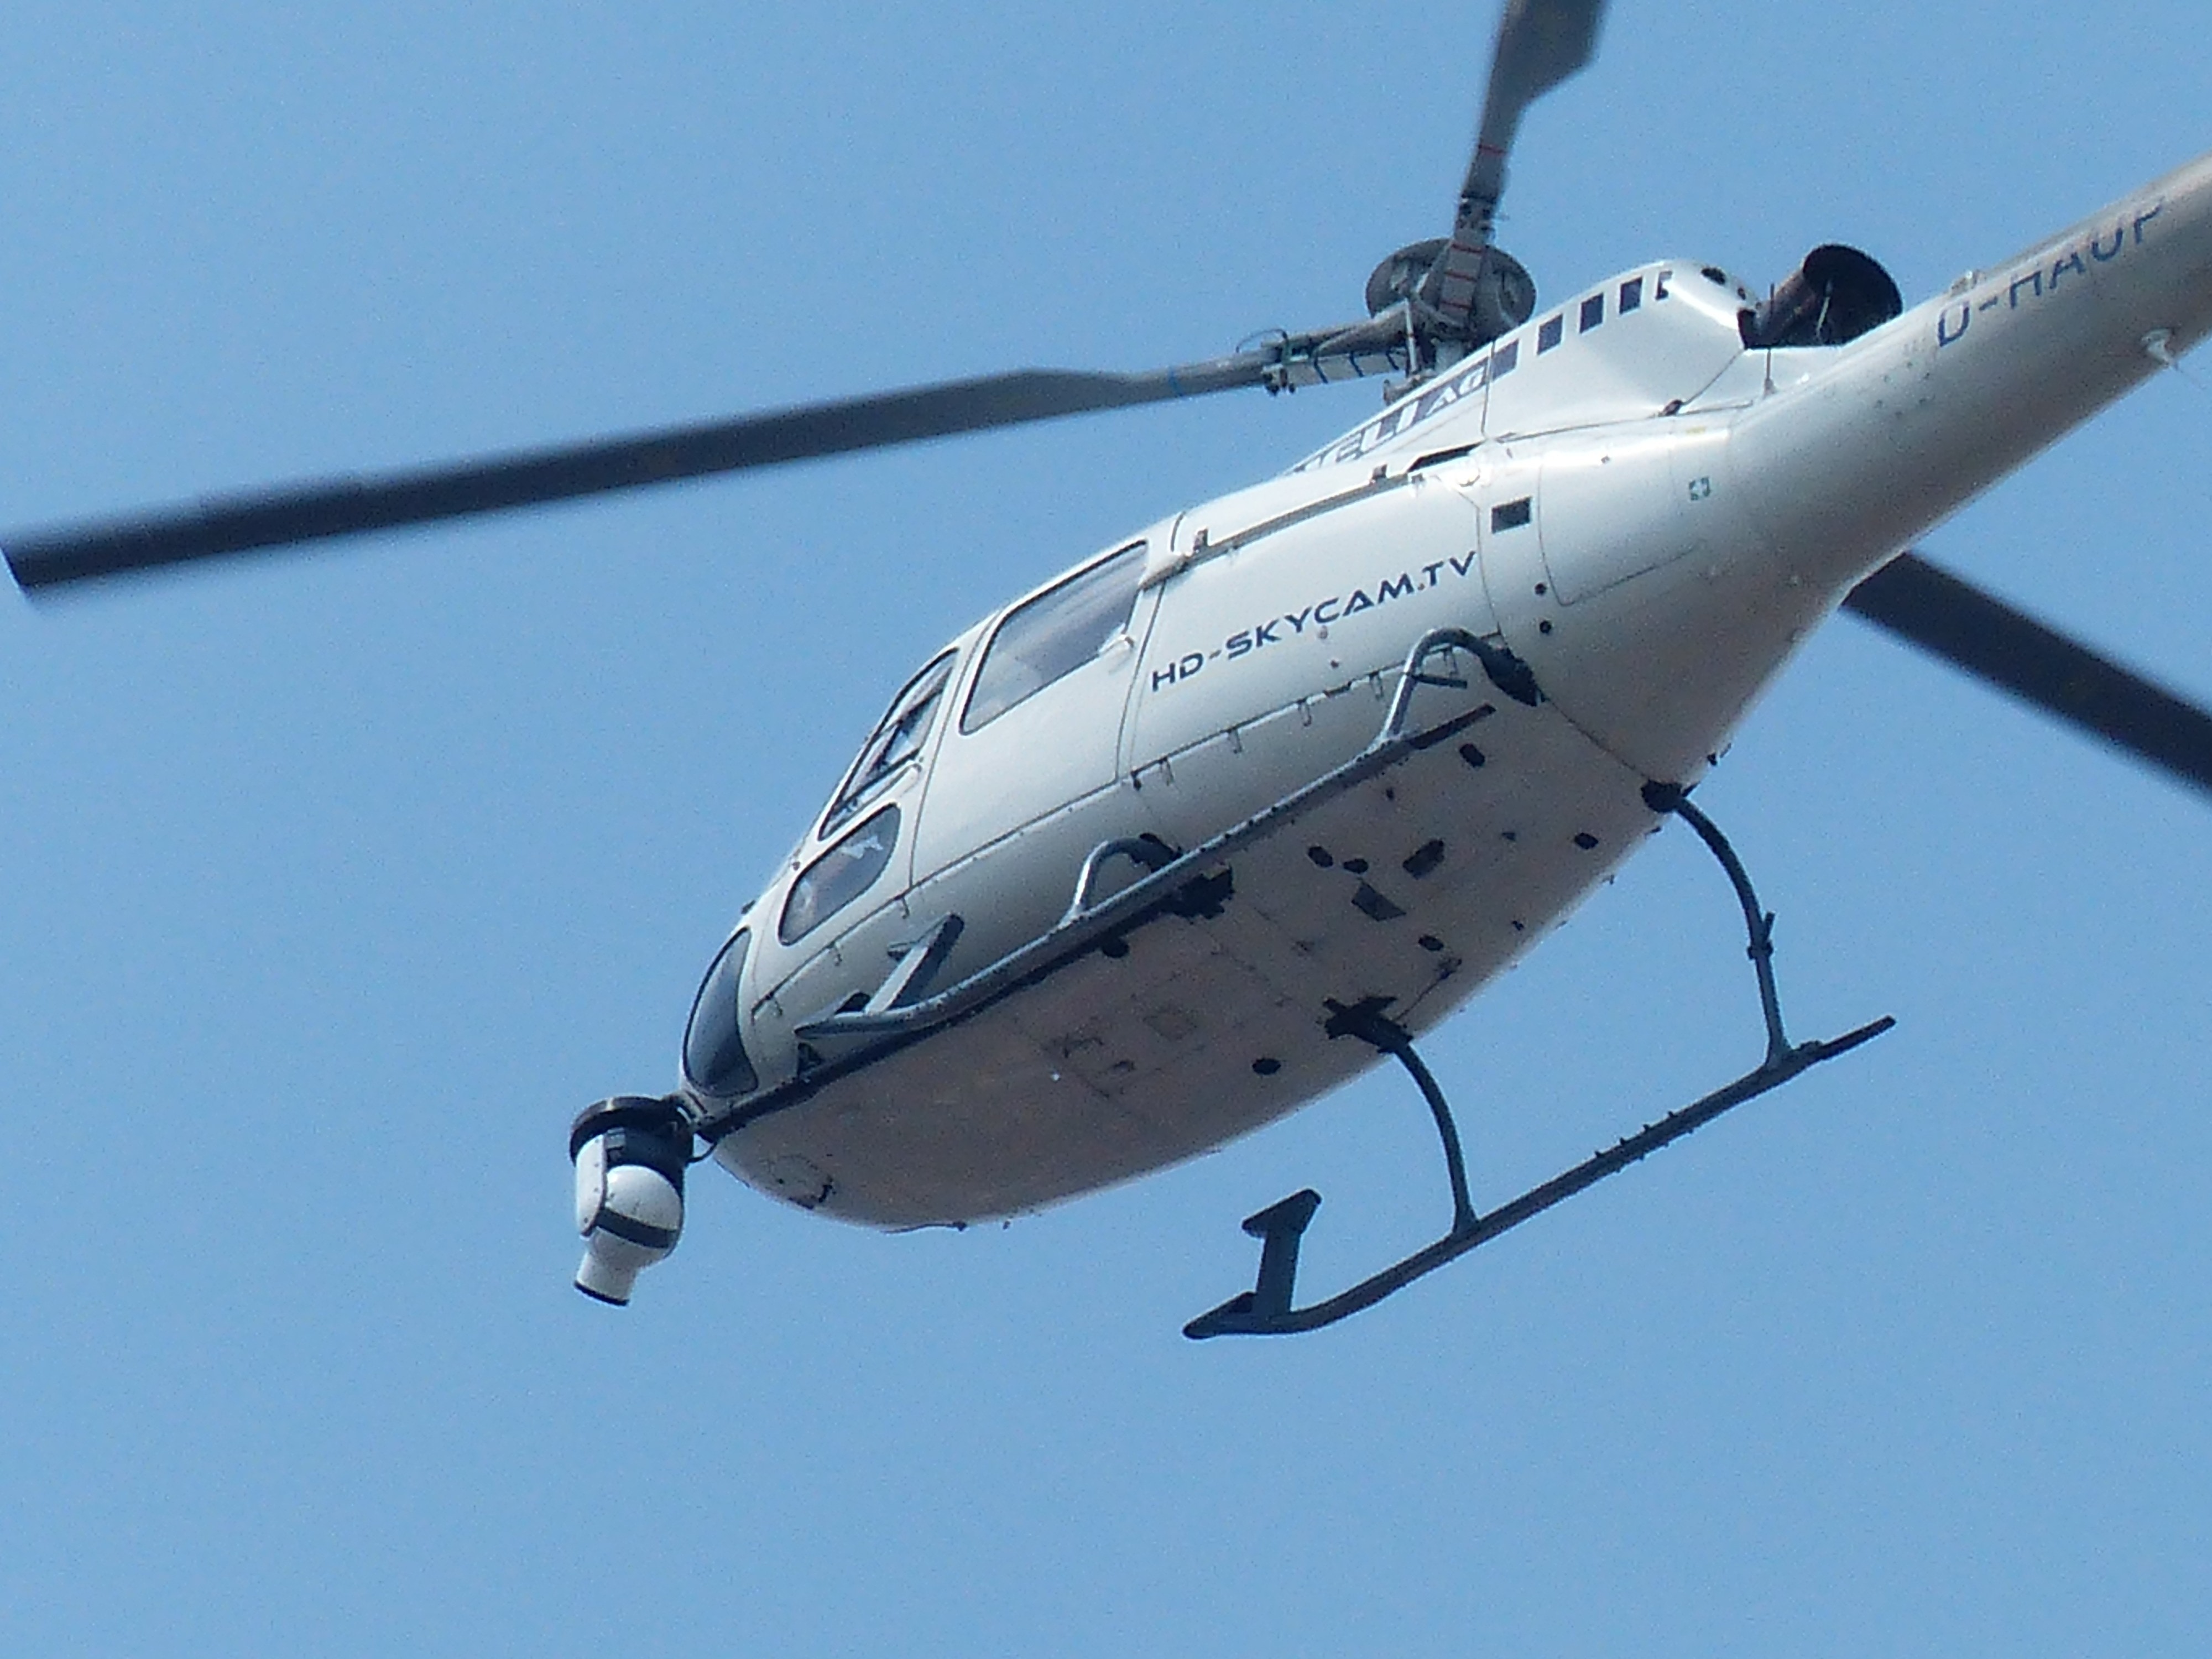 white skycam tv  helicopter